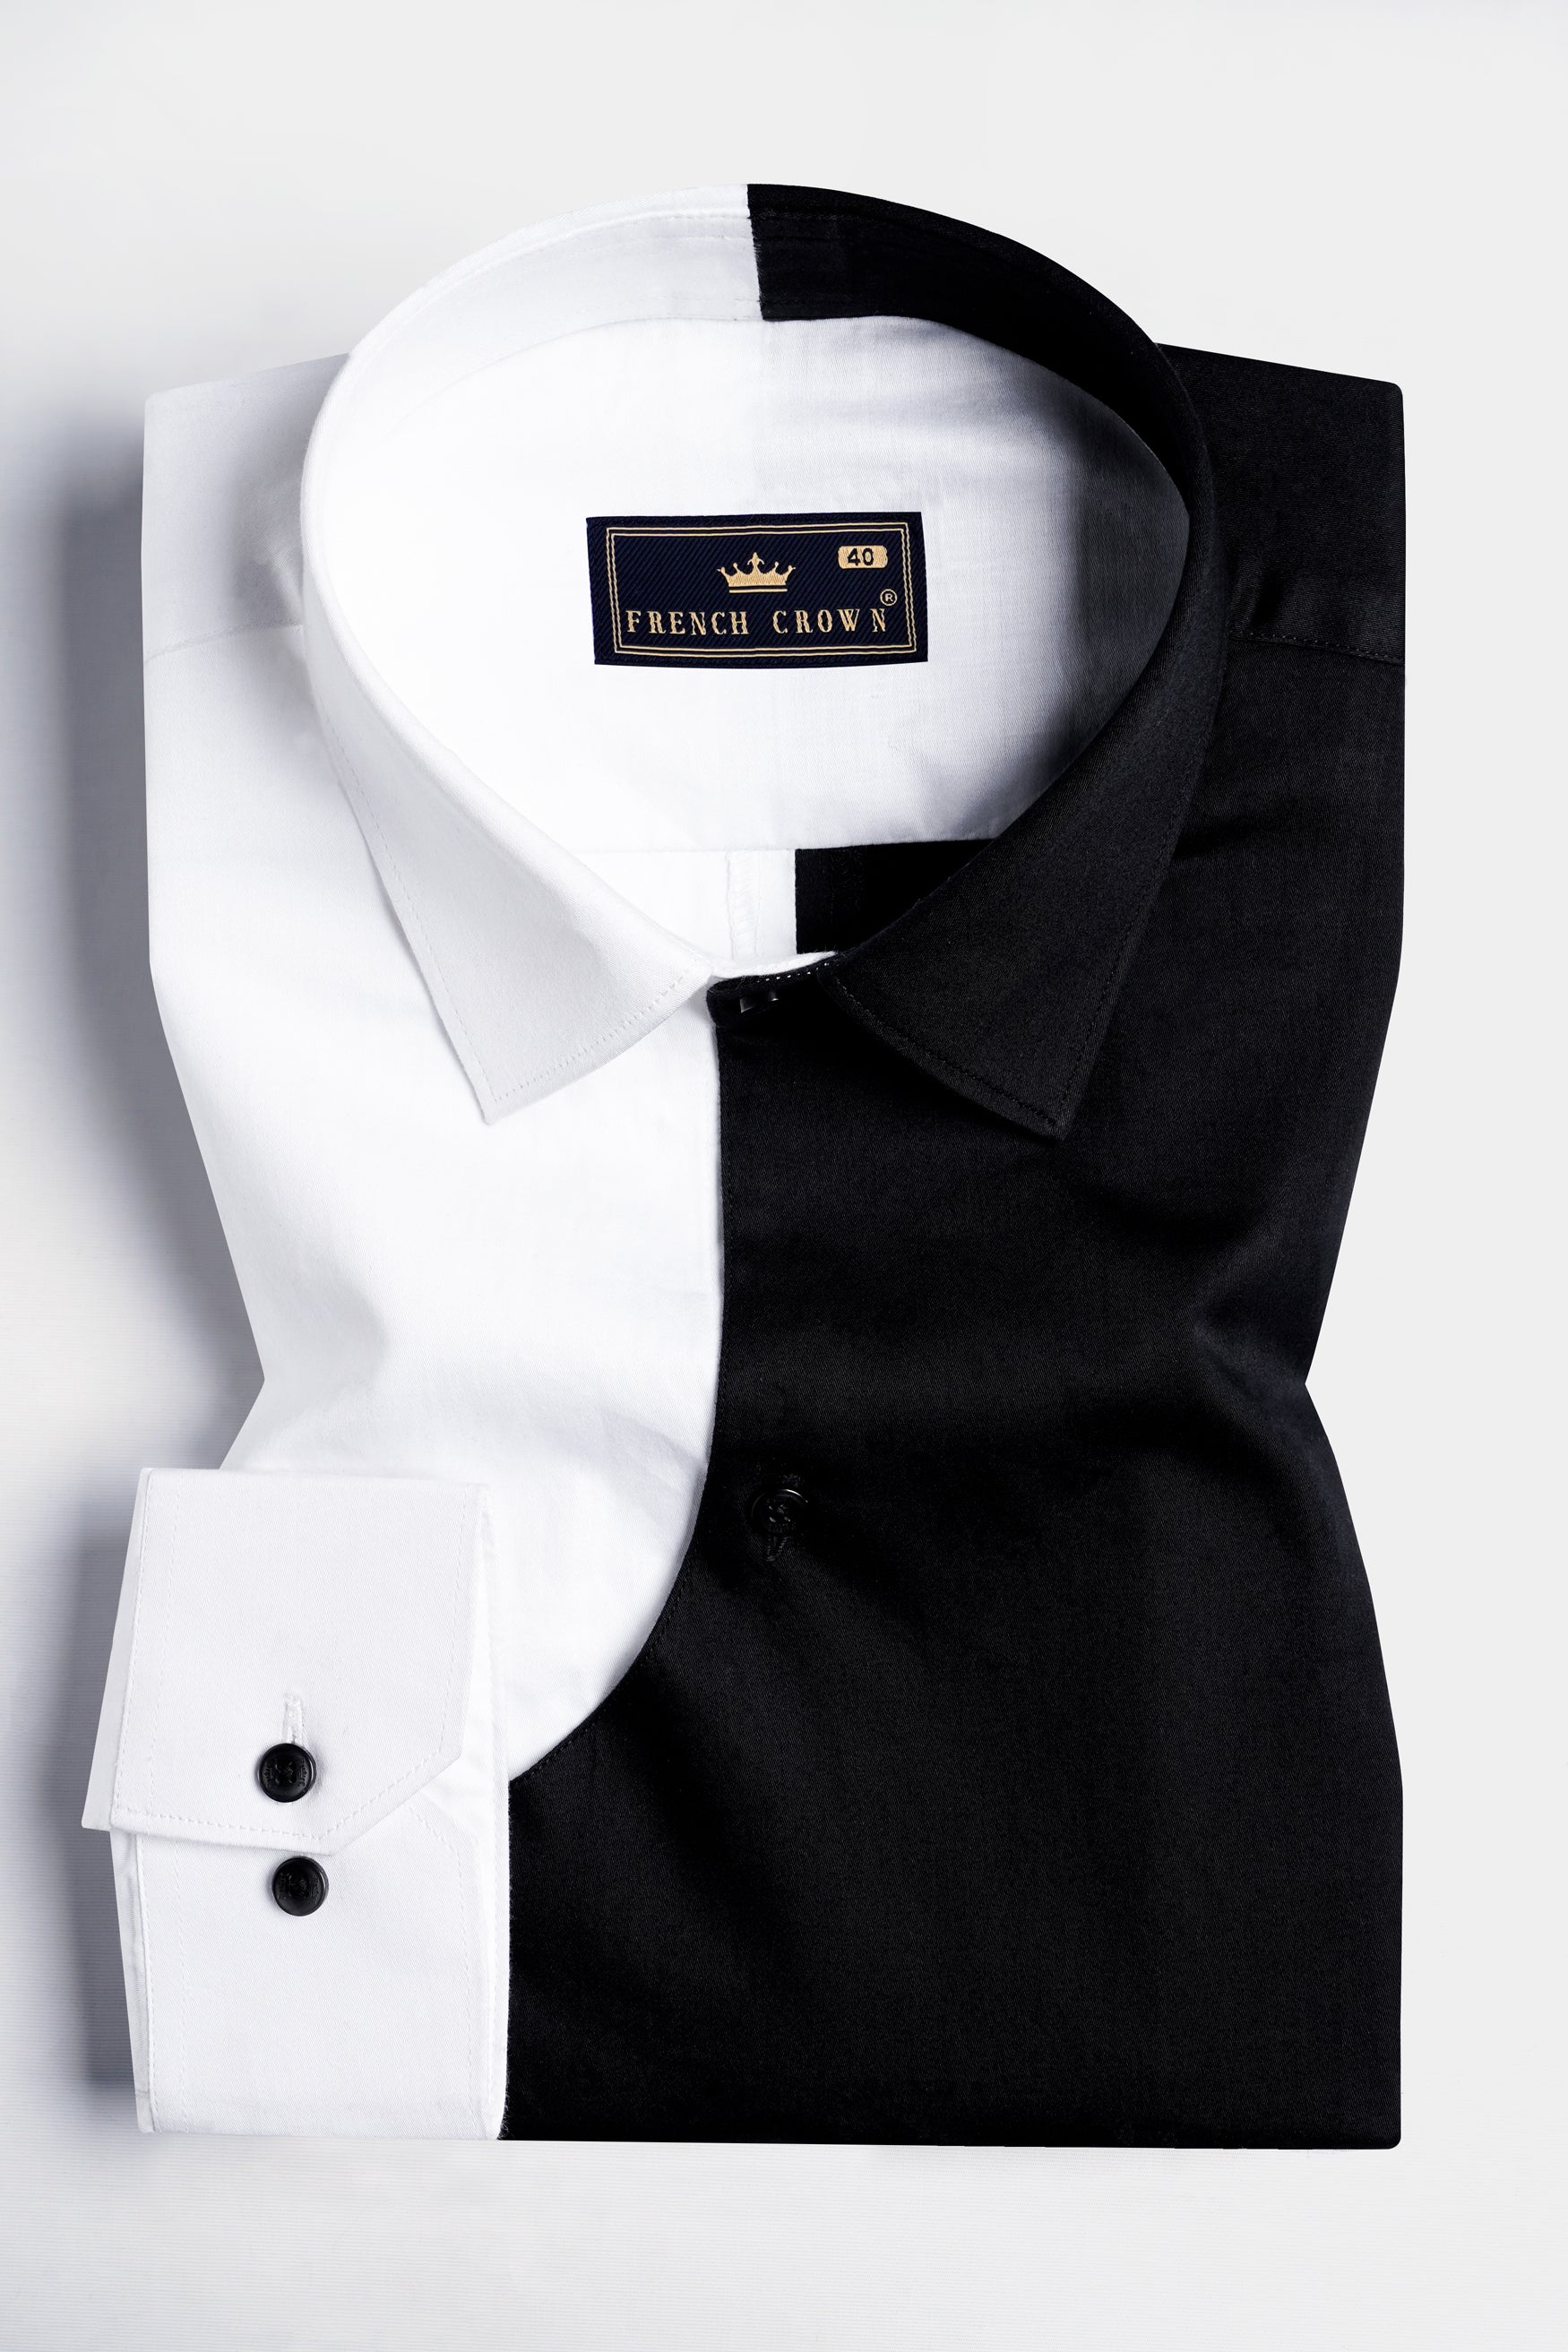 Half White and Half Black Casual Plain-Solid Premium Cotton Shirt For Men -  Snitch Shirts